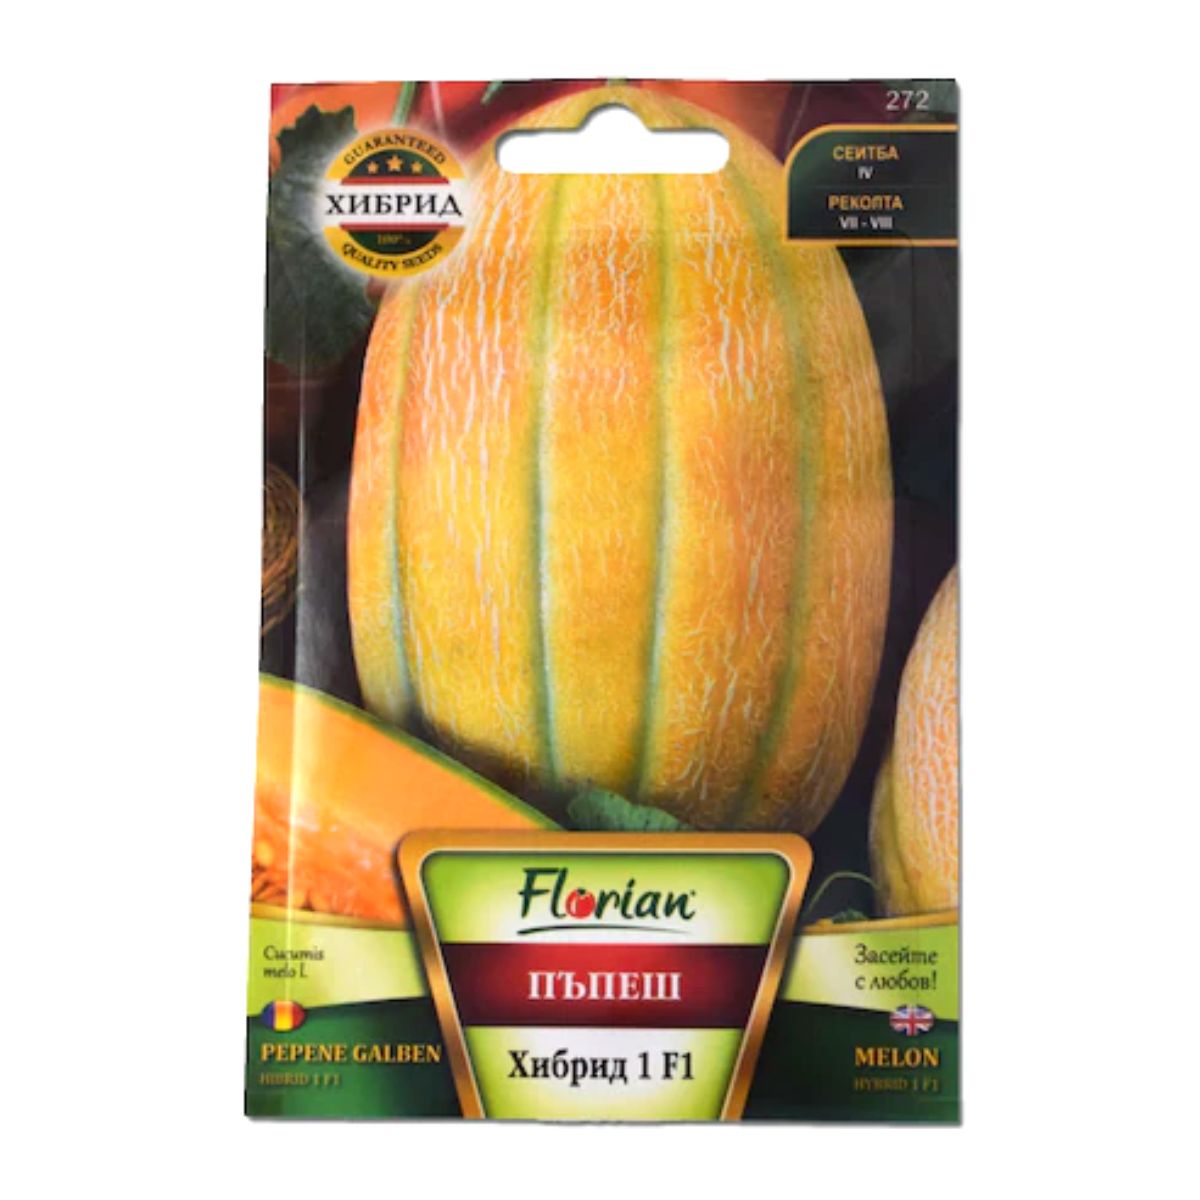 Pepene - Seminte de pepene galben feliat Hibrid 1 F1, 2 grame FLORIAN, hectarul.ro